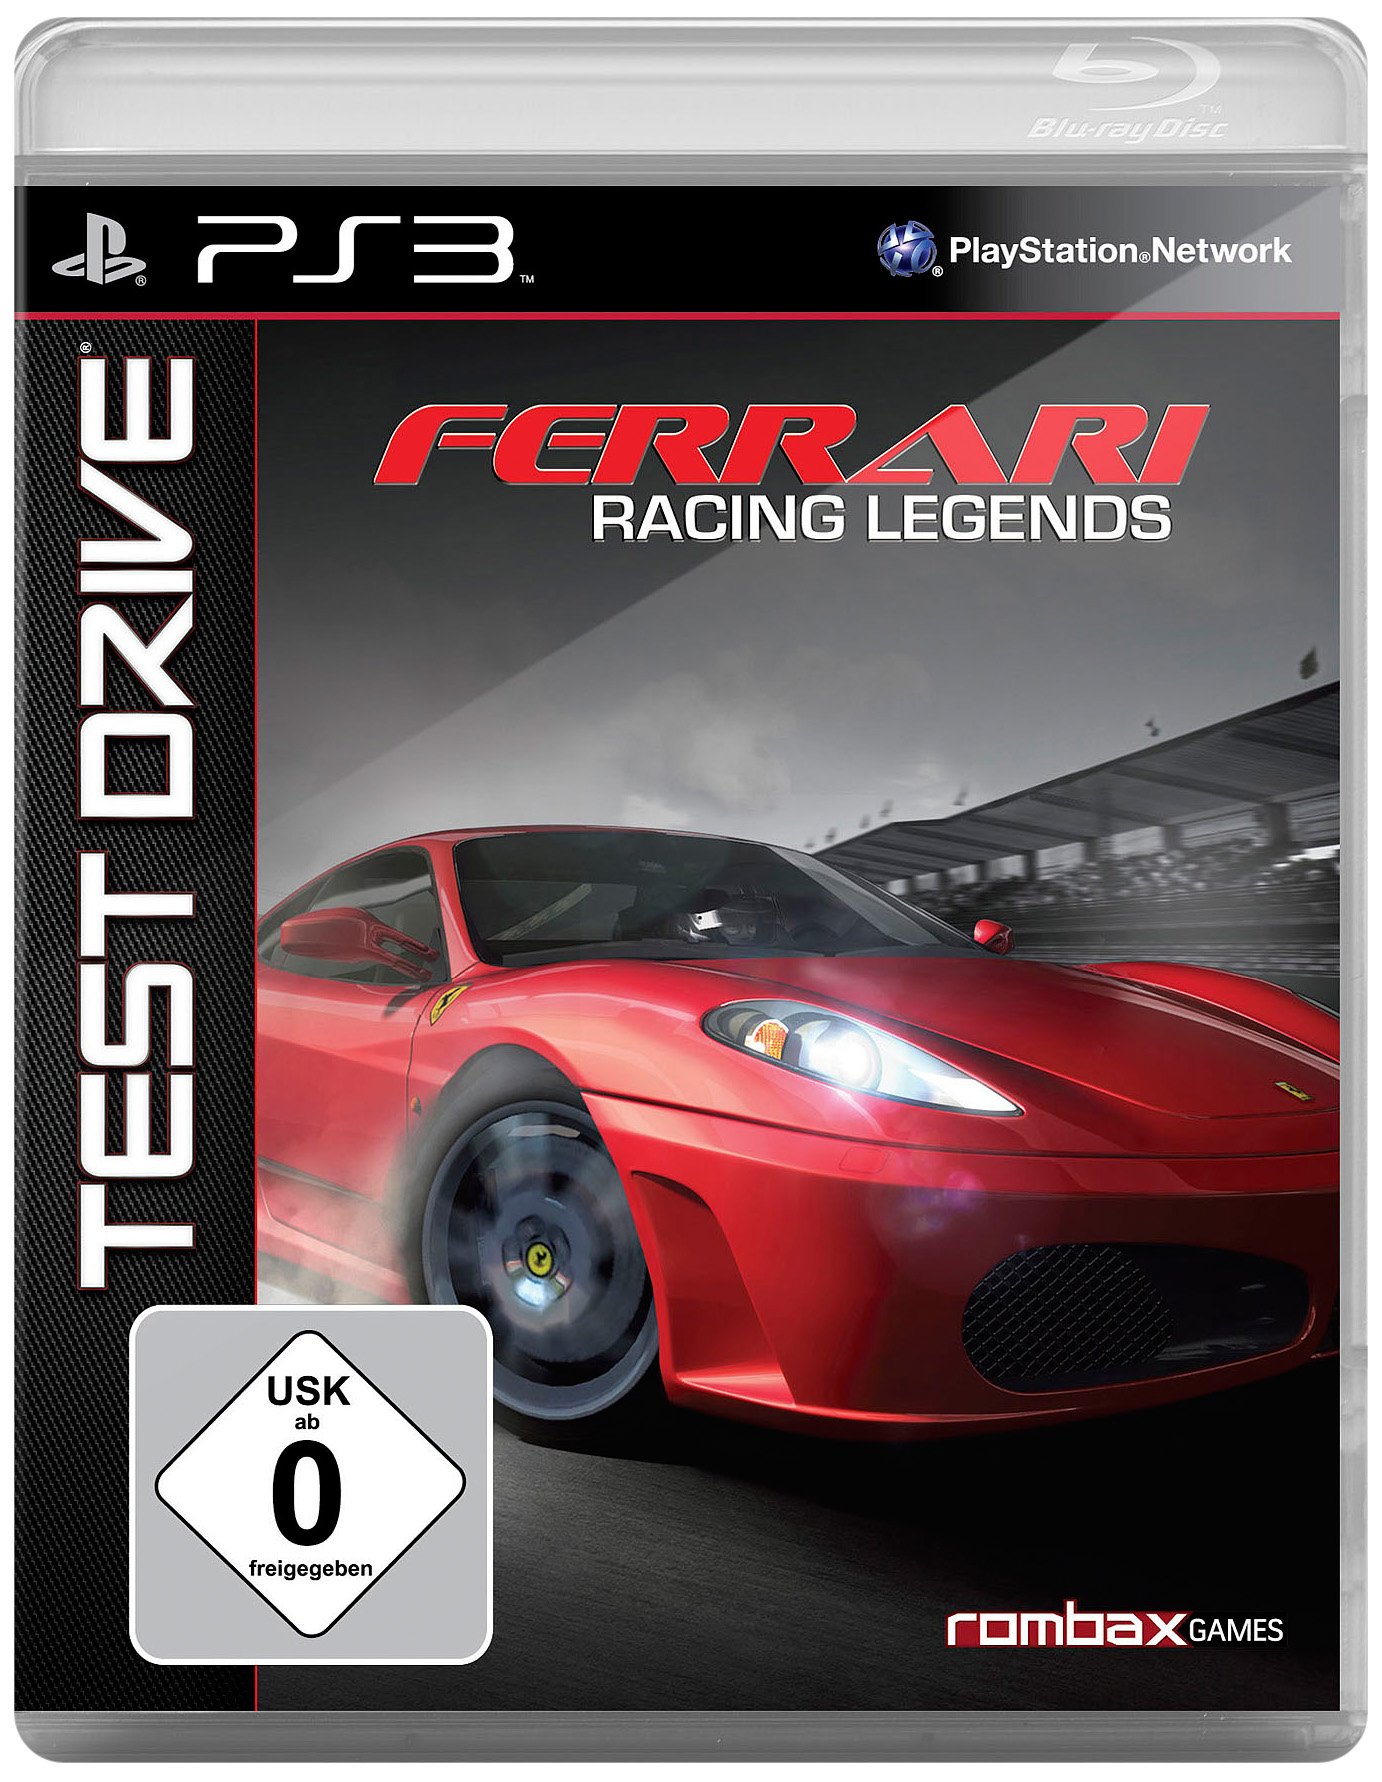 Ferrari race legends. Test Drive Ferrari Racing. Test Drive: Ferrari Racing Legends. Test Drive ps3. Test Drive 3 ps3.